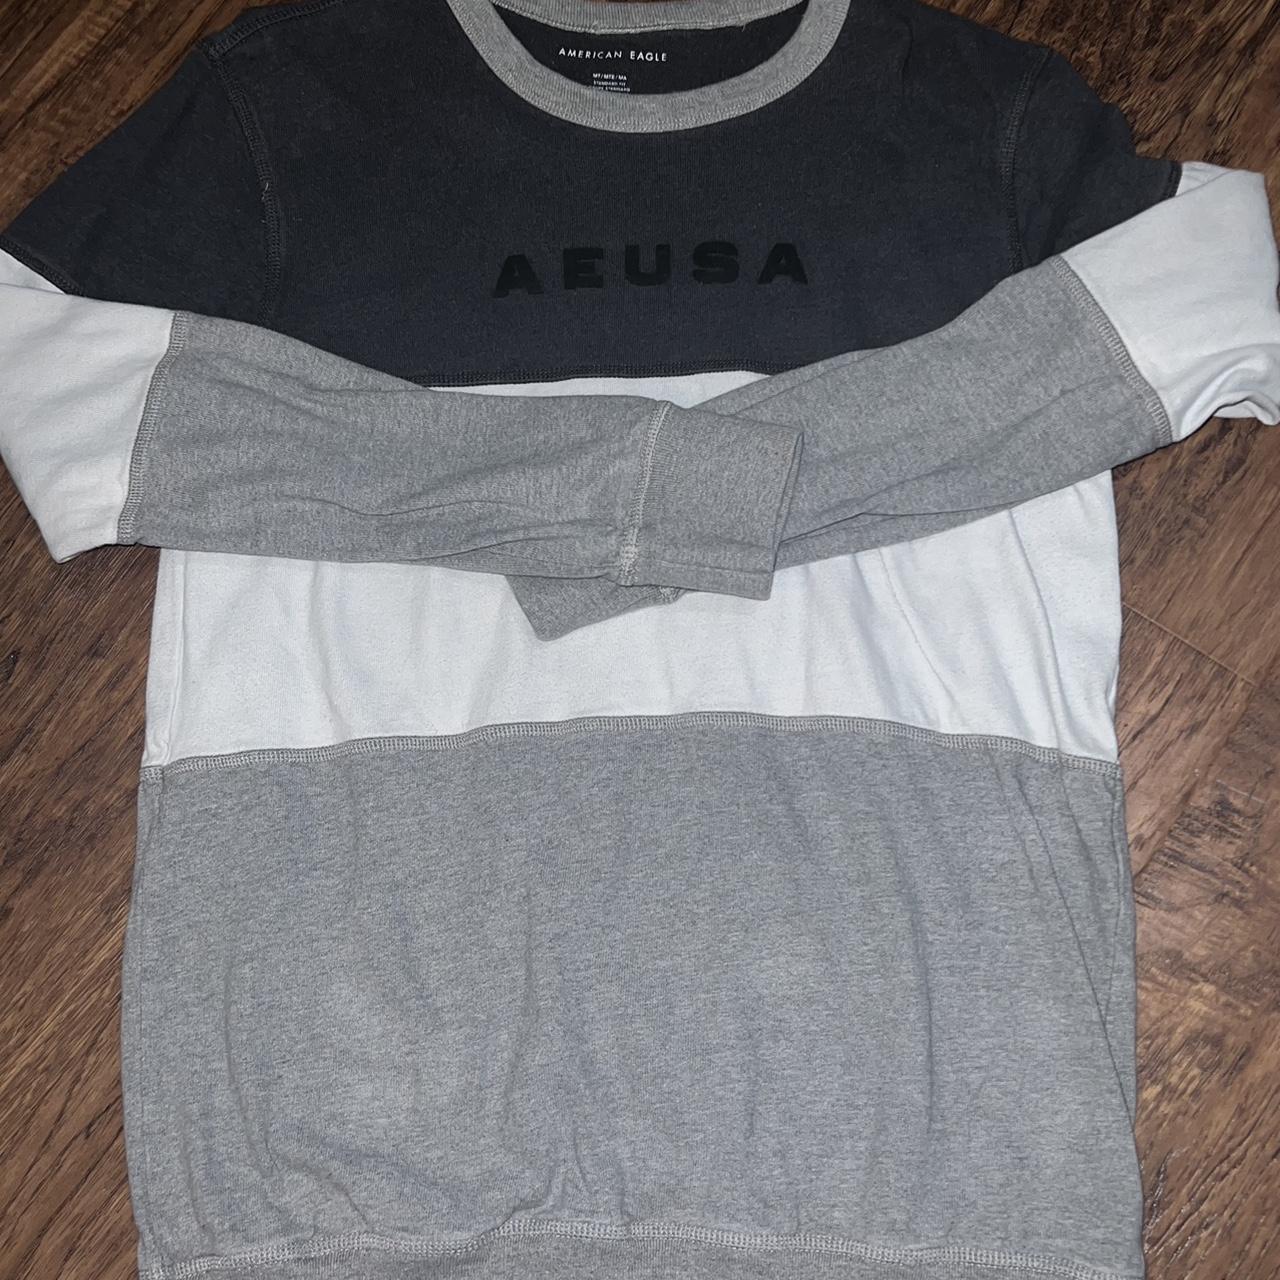 American Apparel Men's White and Grey Sweatshirt